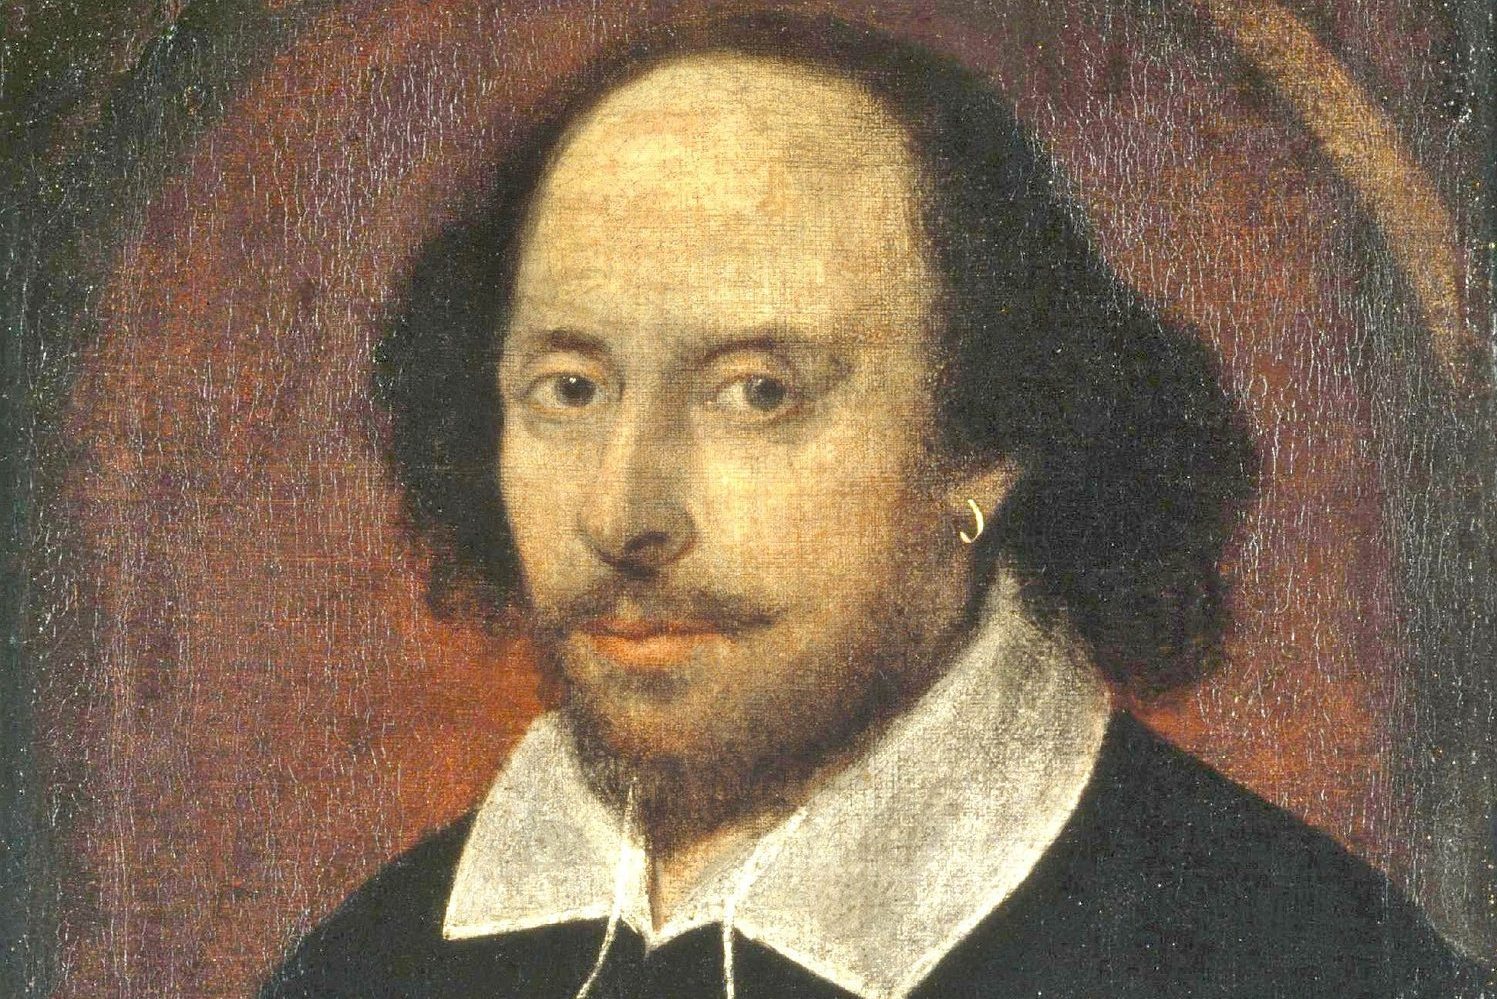 A portrait of William Shakespeare.